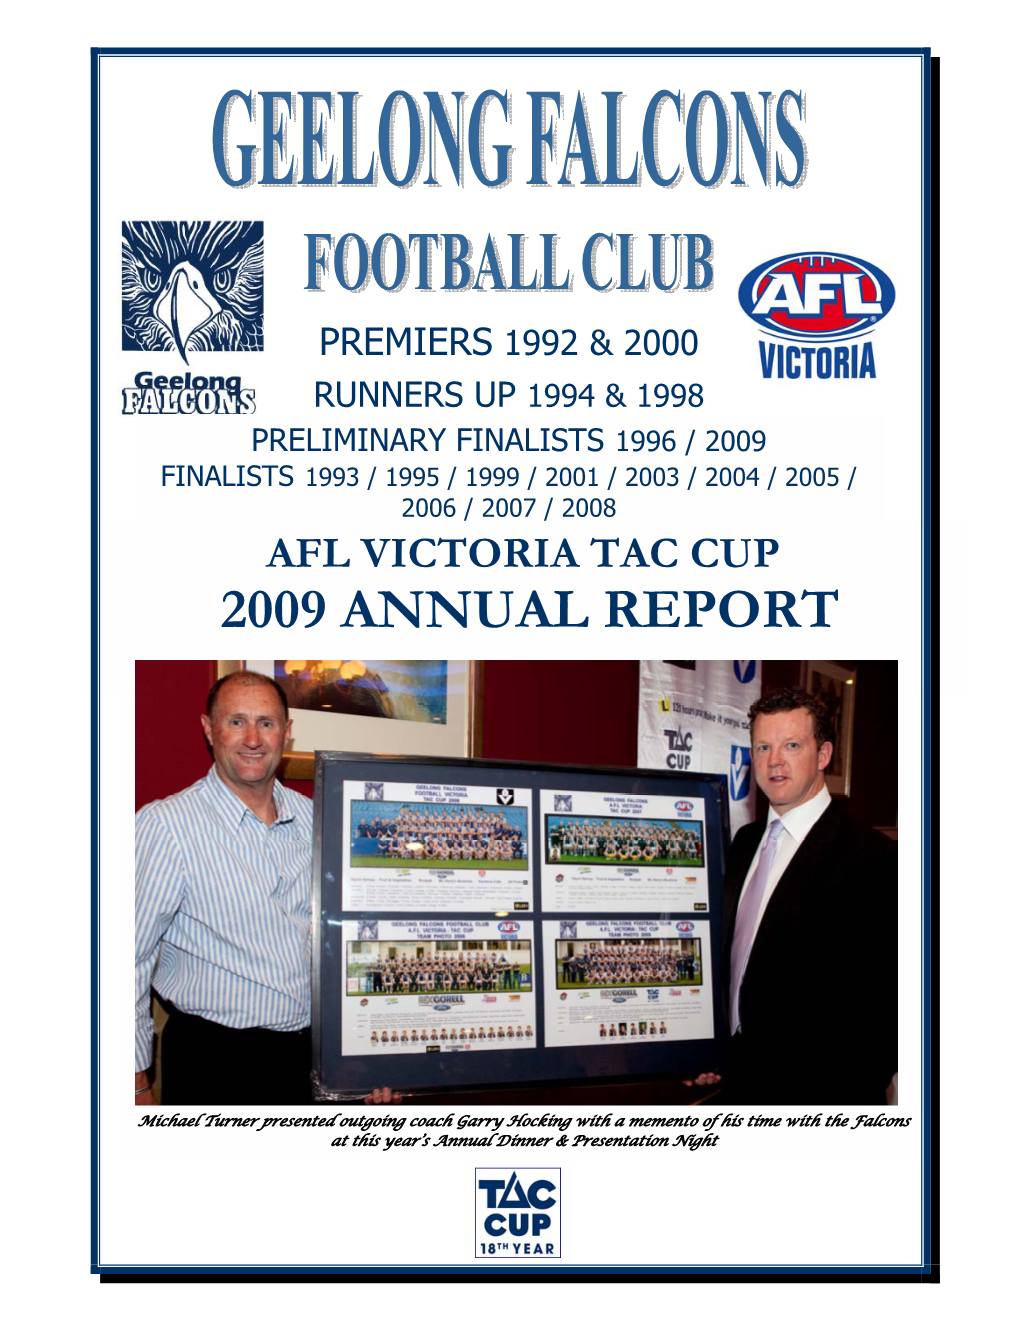 Afl Victoria Tac Cup 2009 Annual Report